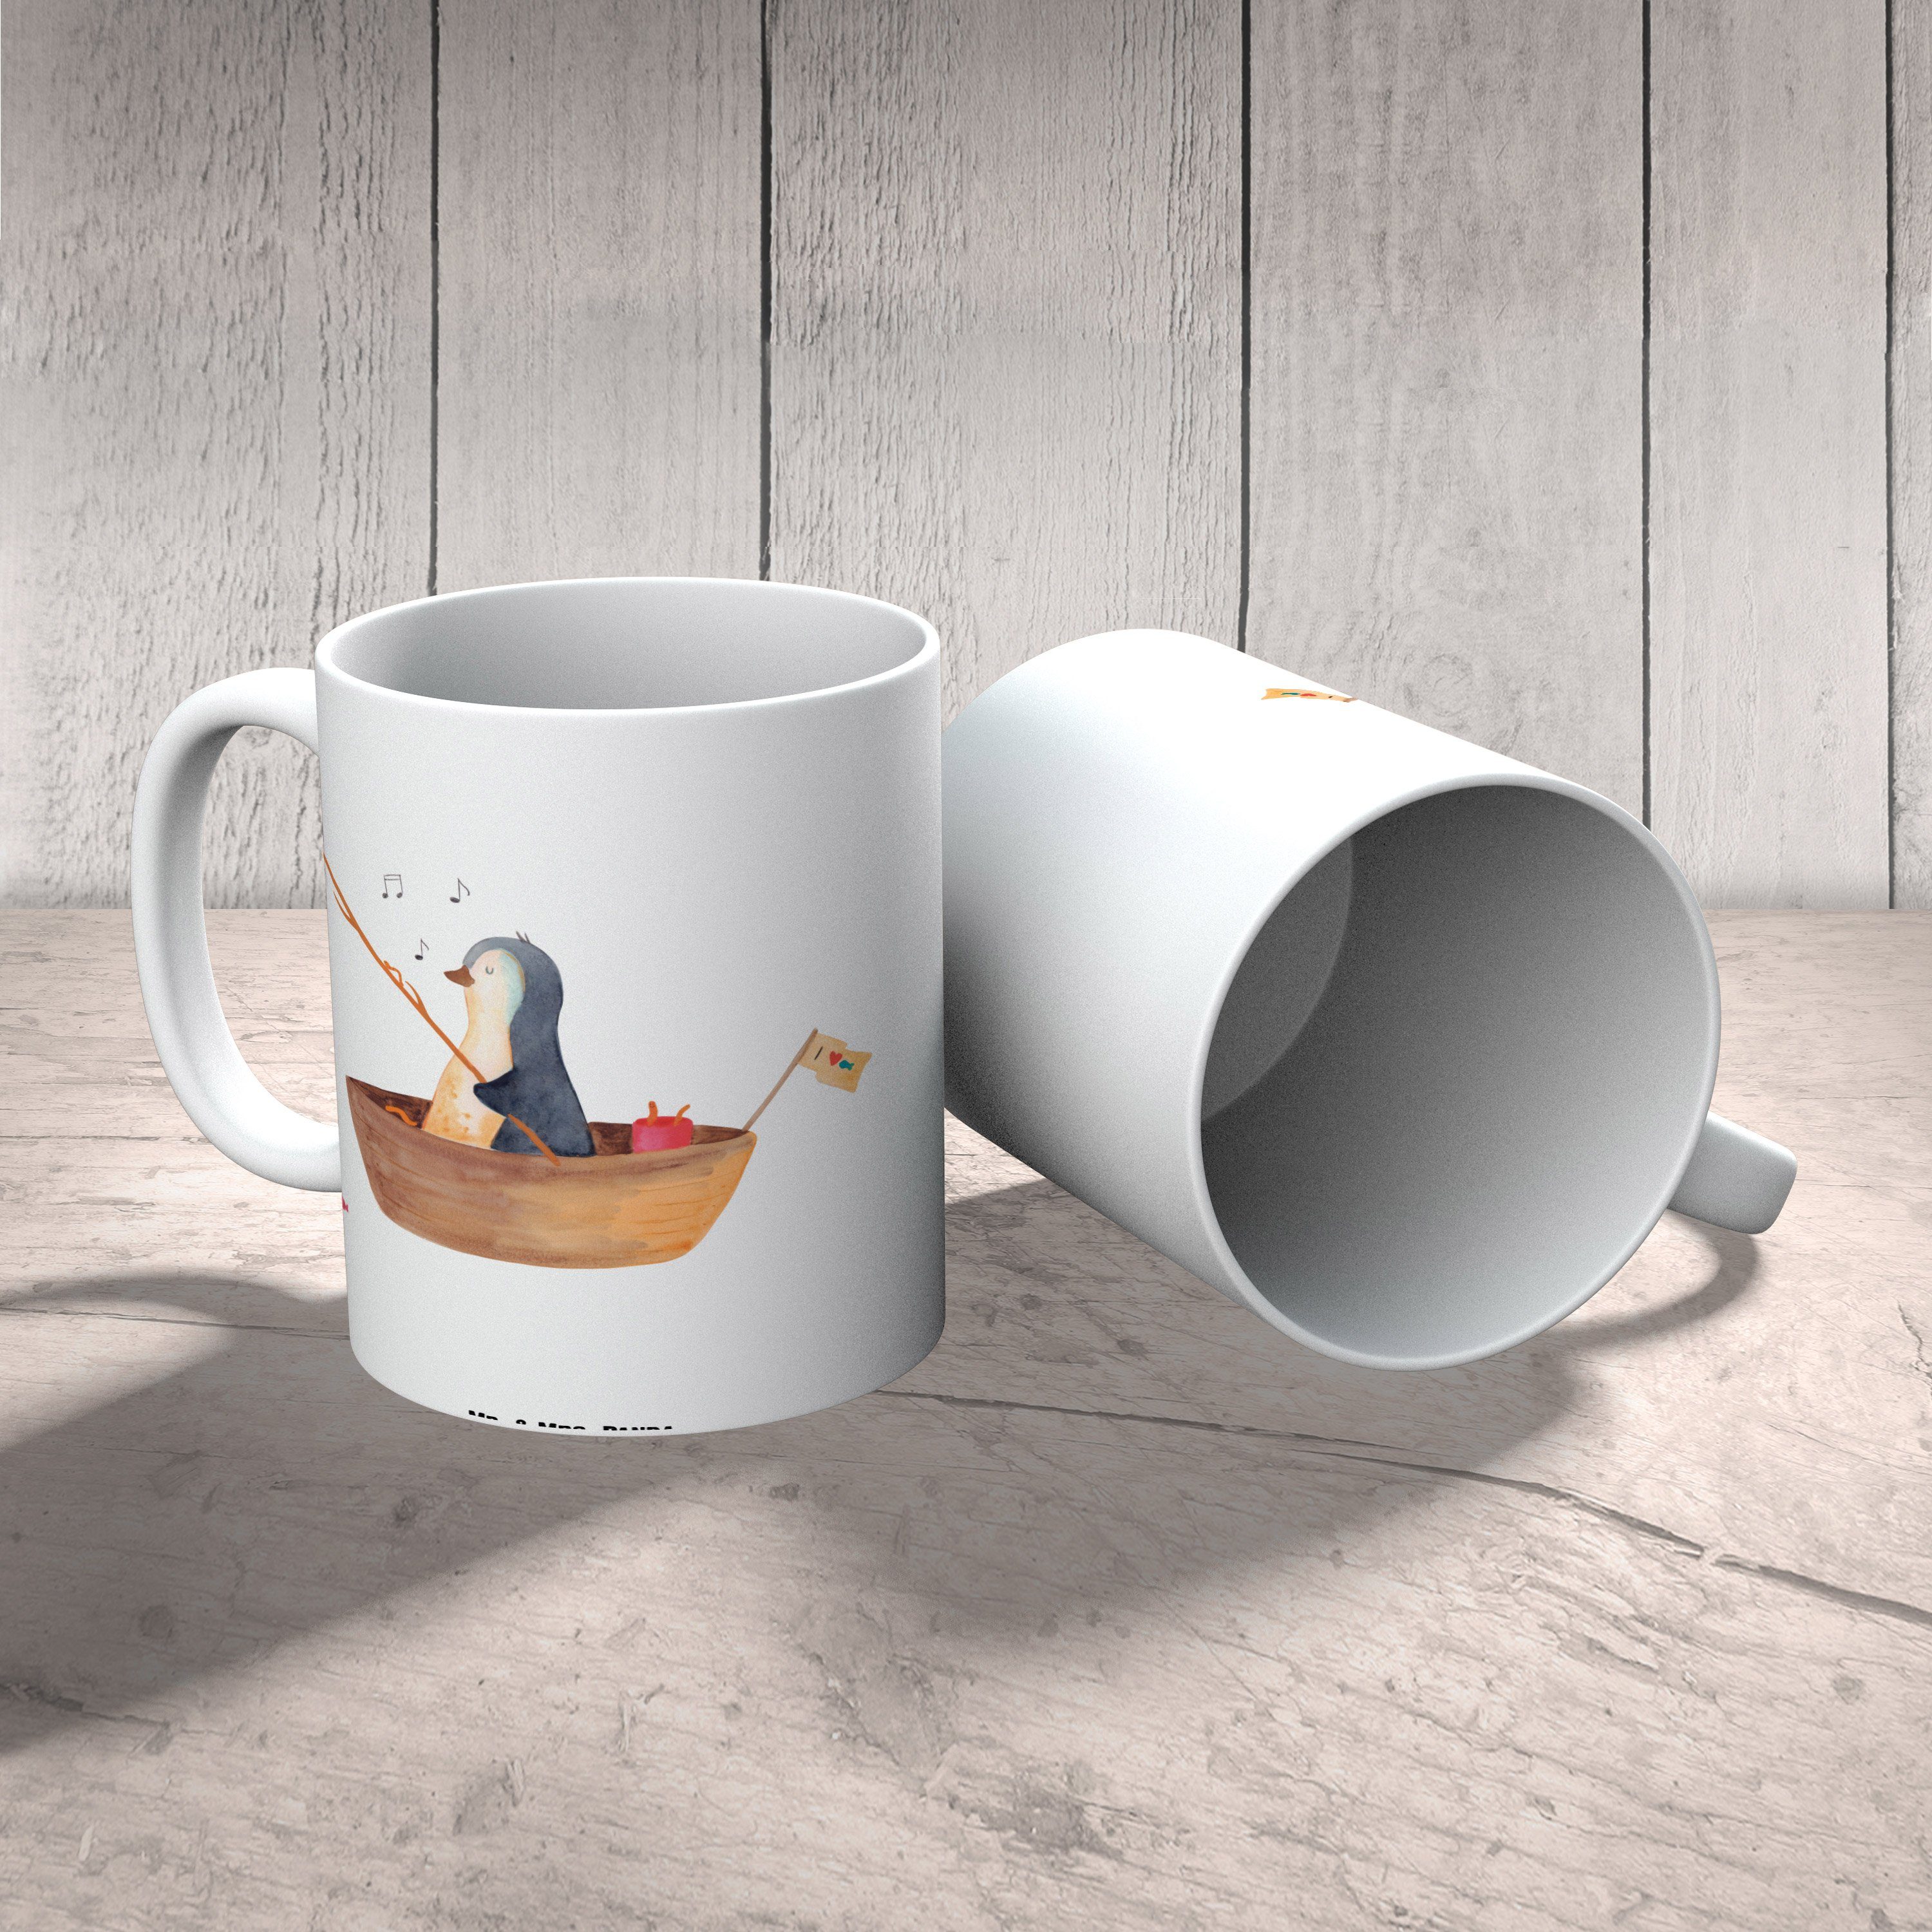 Mr. & Mrs. Panda Tasse, - Neuanfang, Tasse XL Weiß Geschenk, v, Tasse Große Leben, Pinguin - Keramik Angelboot